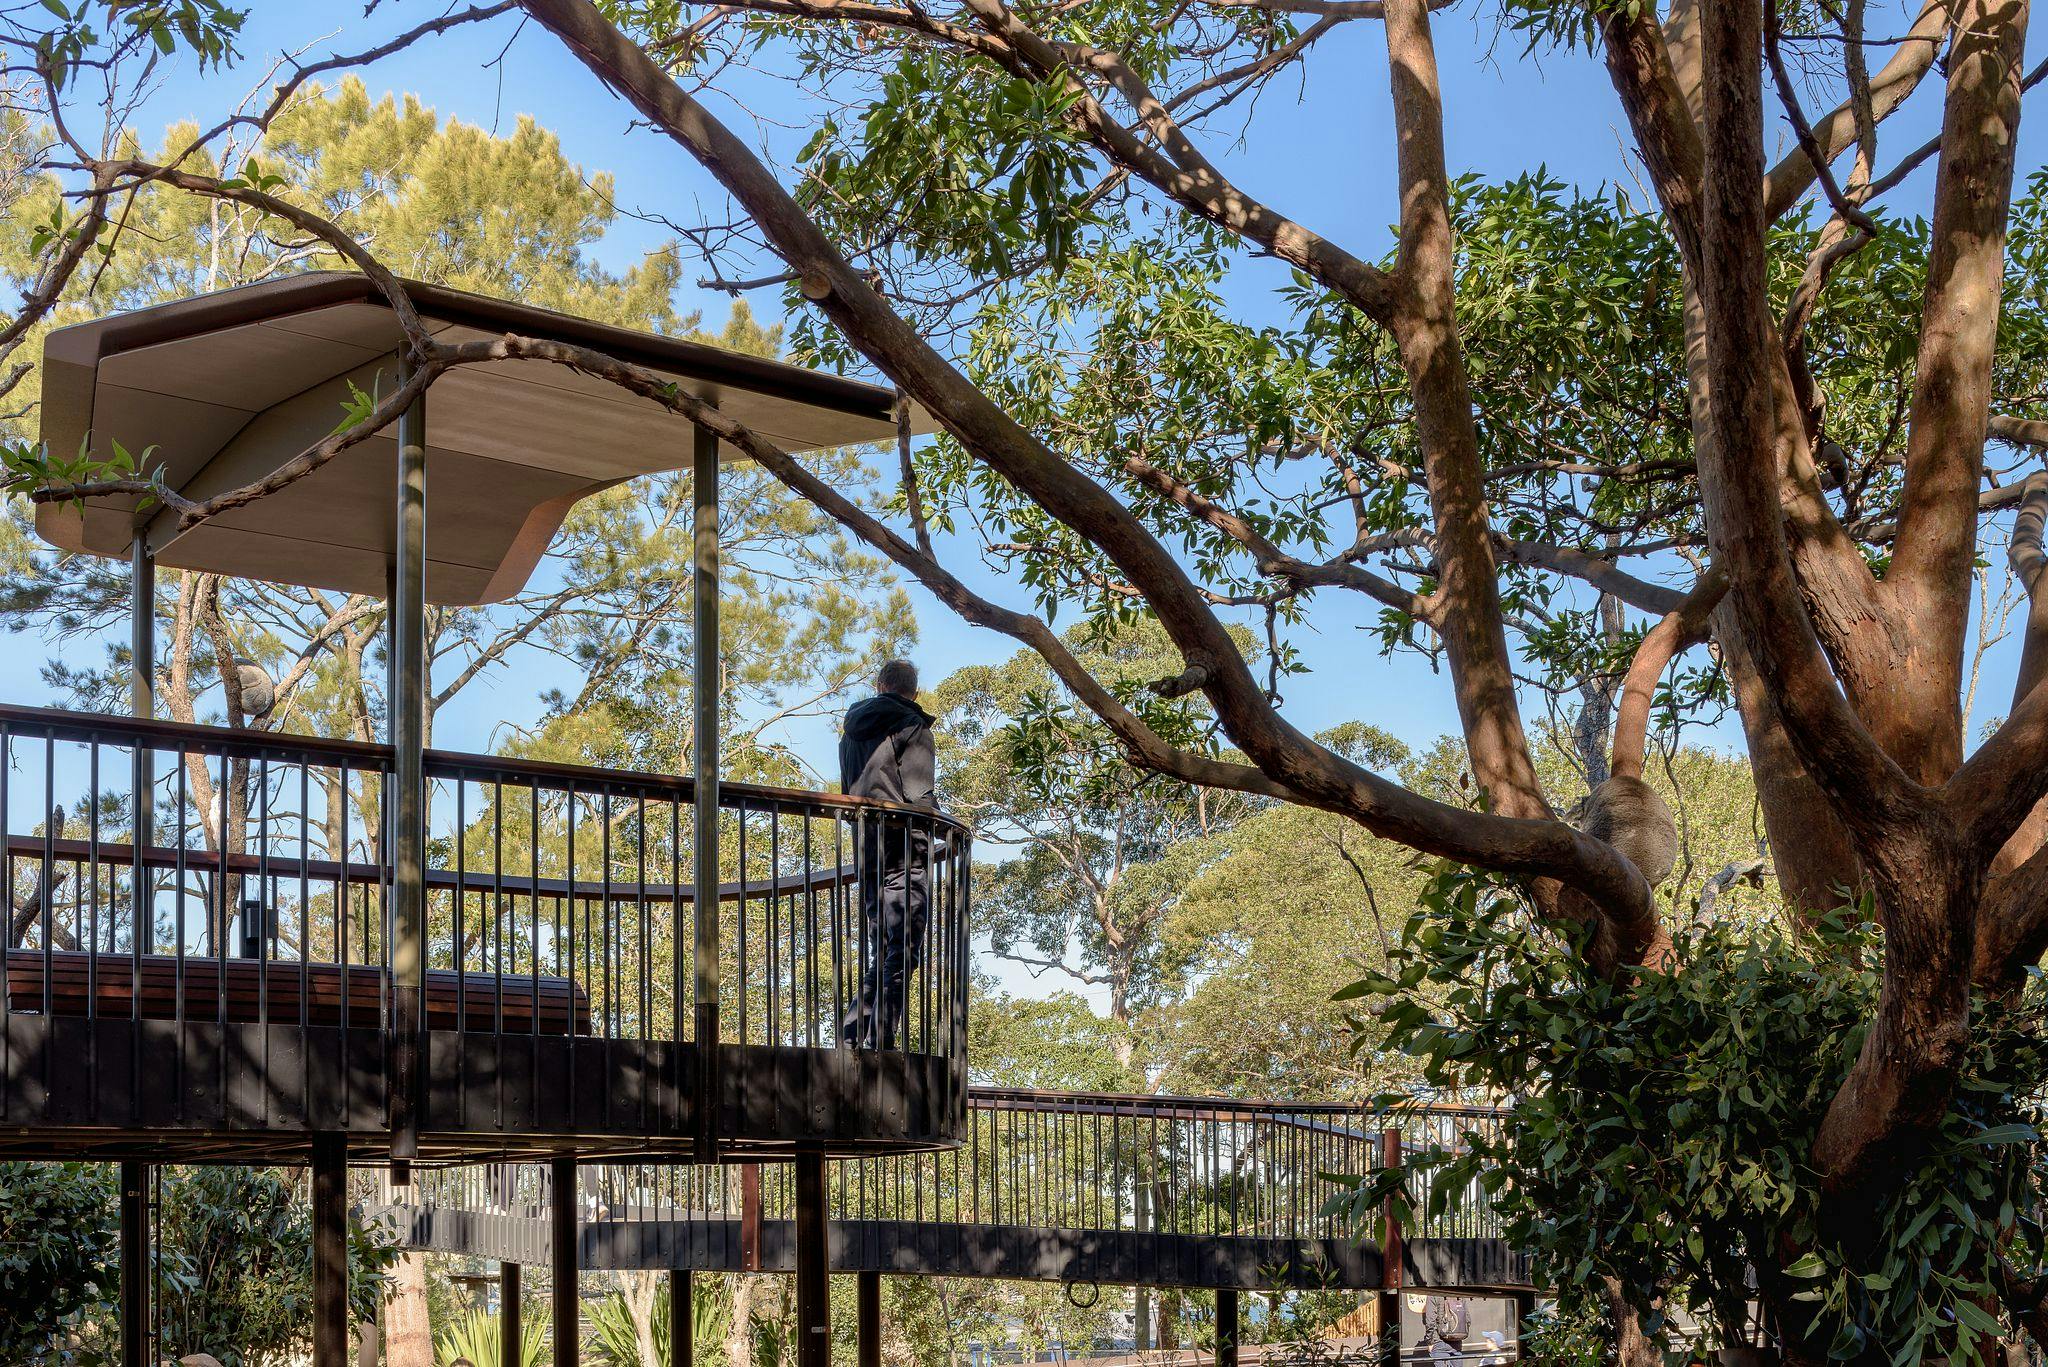 Taronga Zoo Sydney's new immersive Australian Habitat